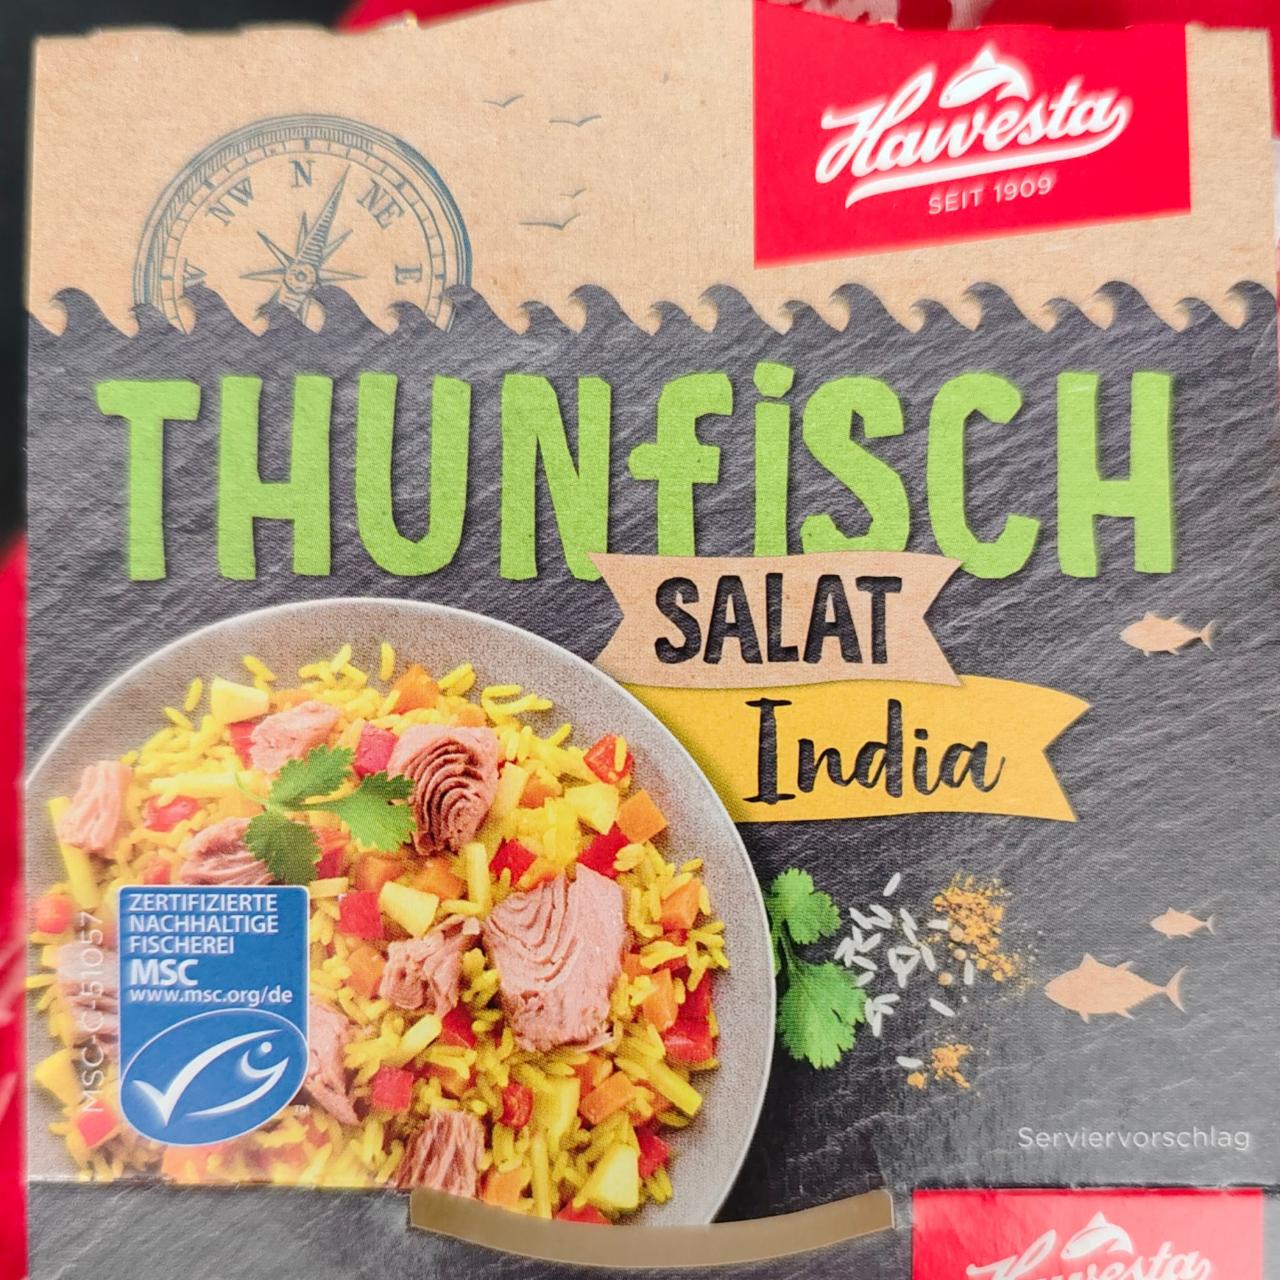 Fotografie - Thunfisch Salat India Hawesta